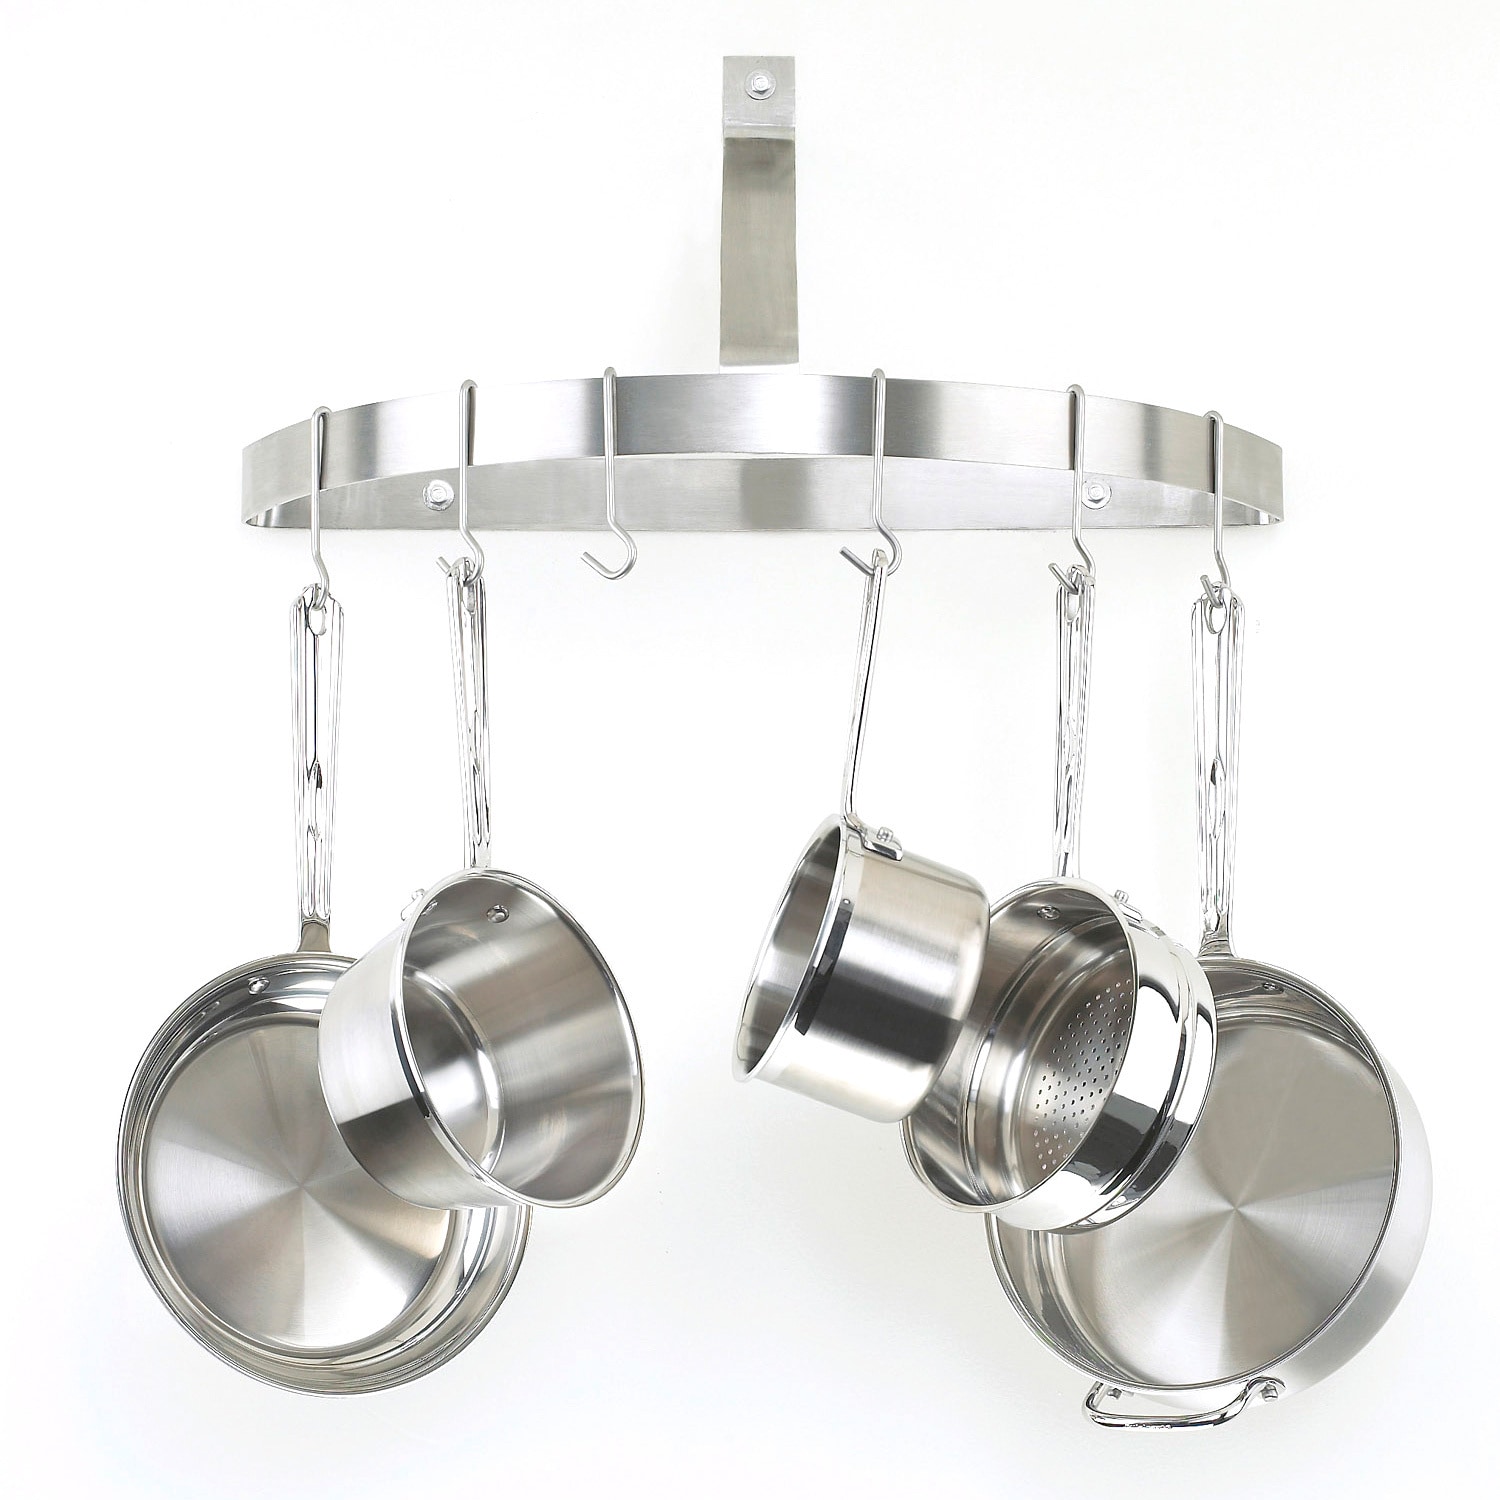 Silver Octagonal Hanging Rack Pots Pan Kitchen Hooks Cuisinart Stainless Steel